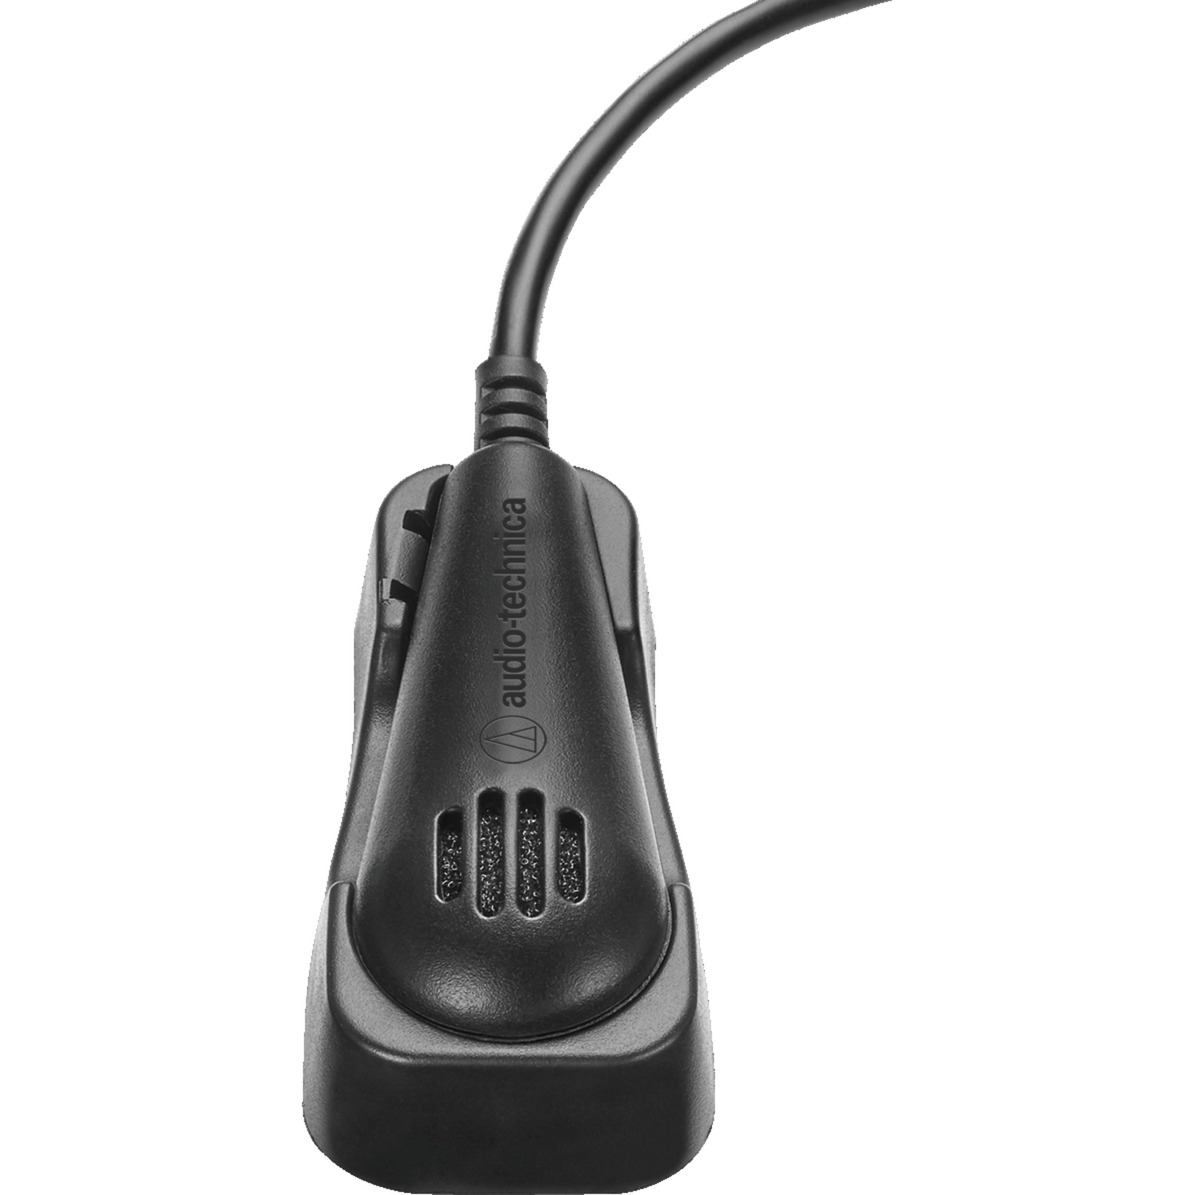 Image of Alternate - ATR4650-USB, Mikrofon online einkaufen bei Alternate